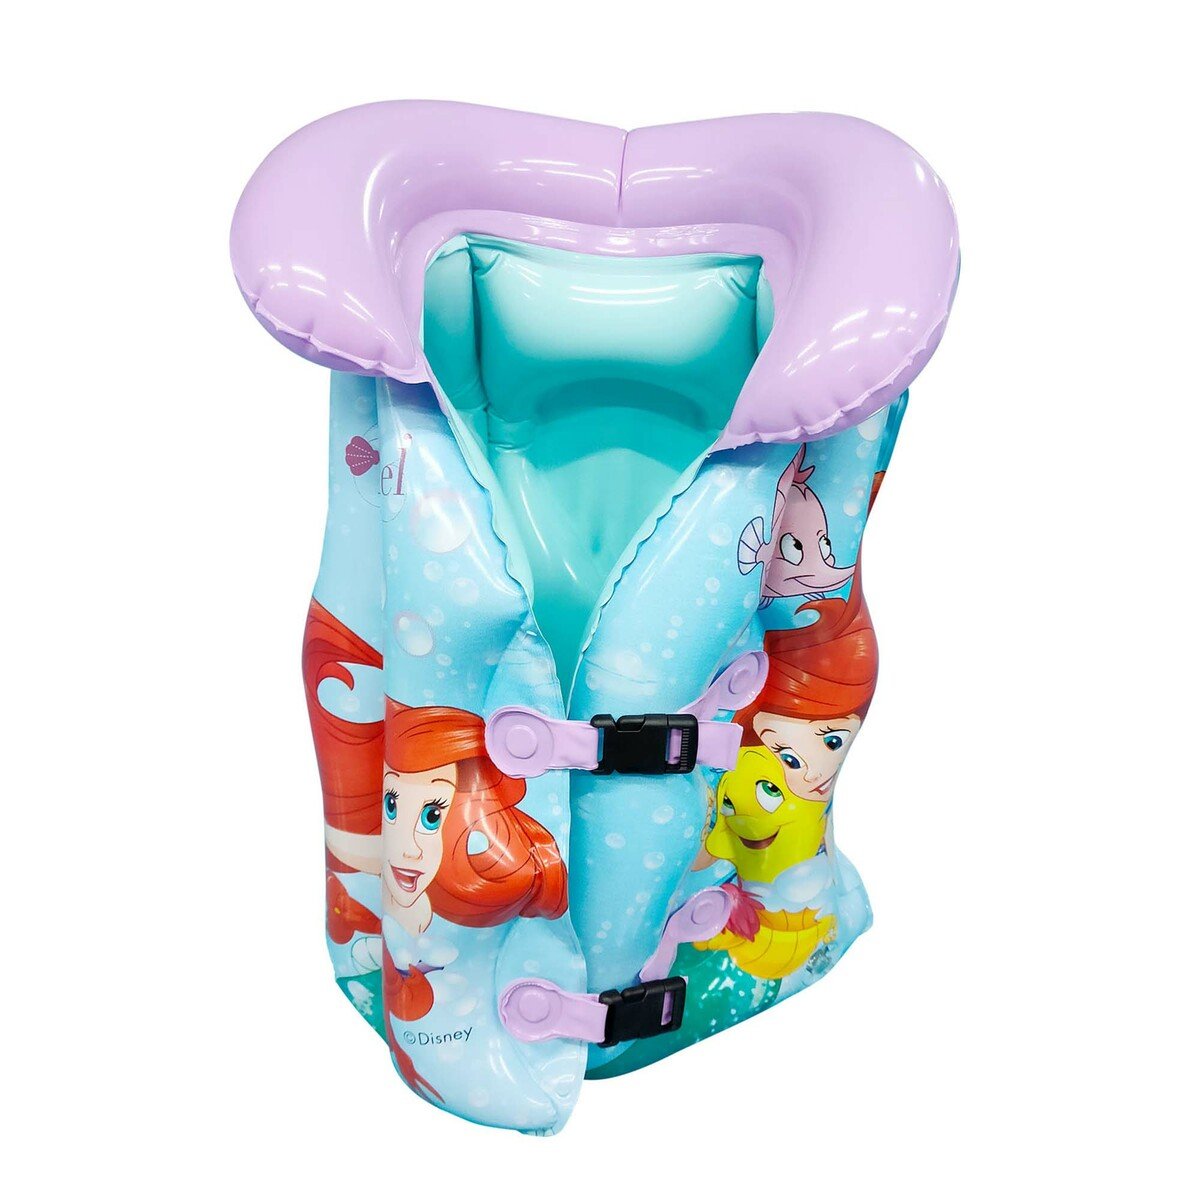 Disney Princess Printed Kids Inflatable Swim Vest - Multi Color  TRHA5999